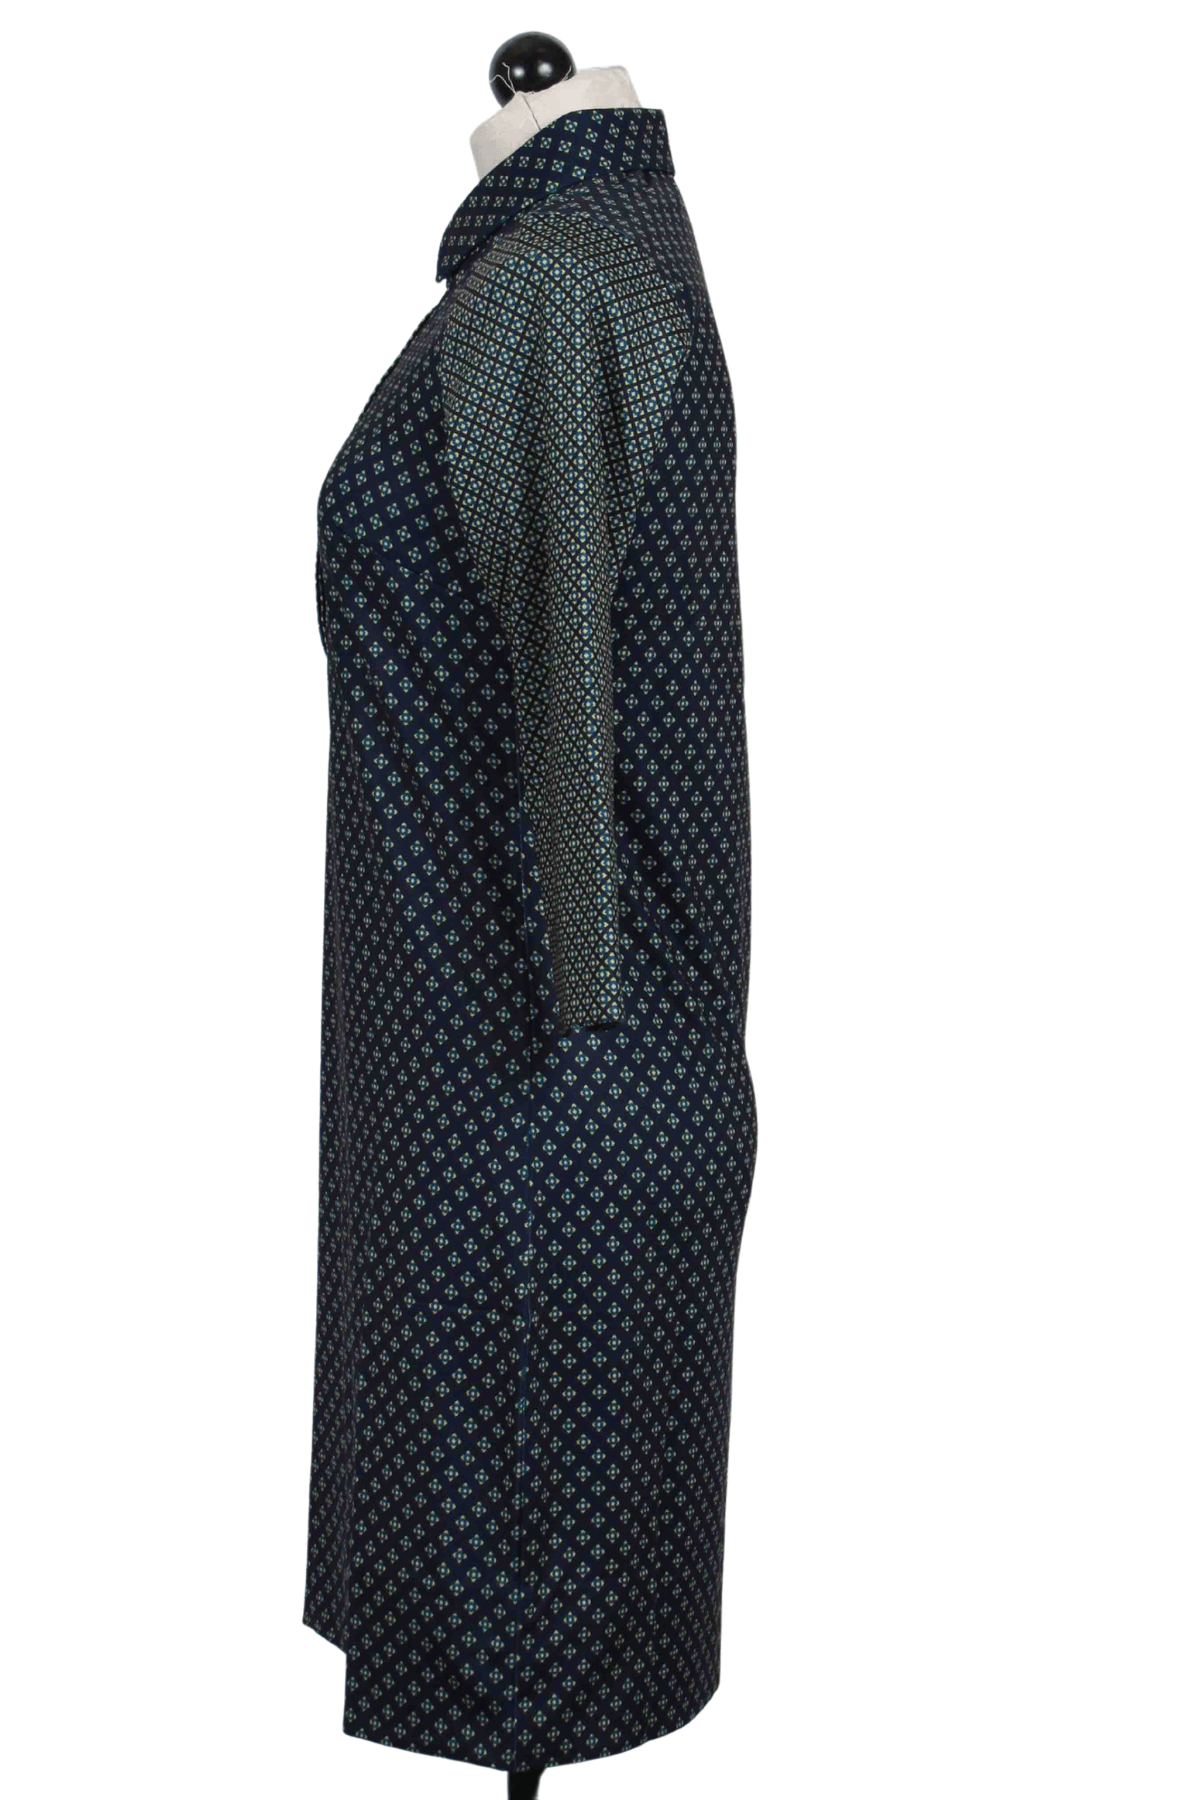 side view of navy Diamond Dot 3/4 Sleeve Everyday Dress by Gretchen Scott